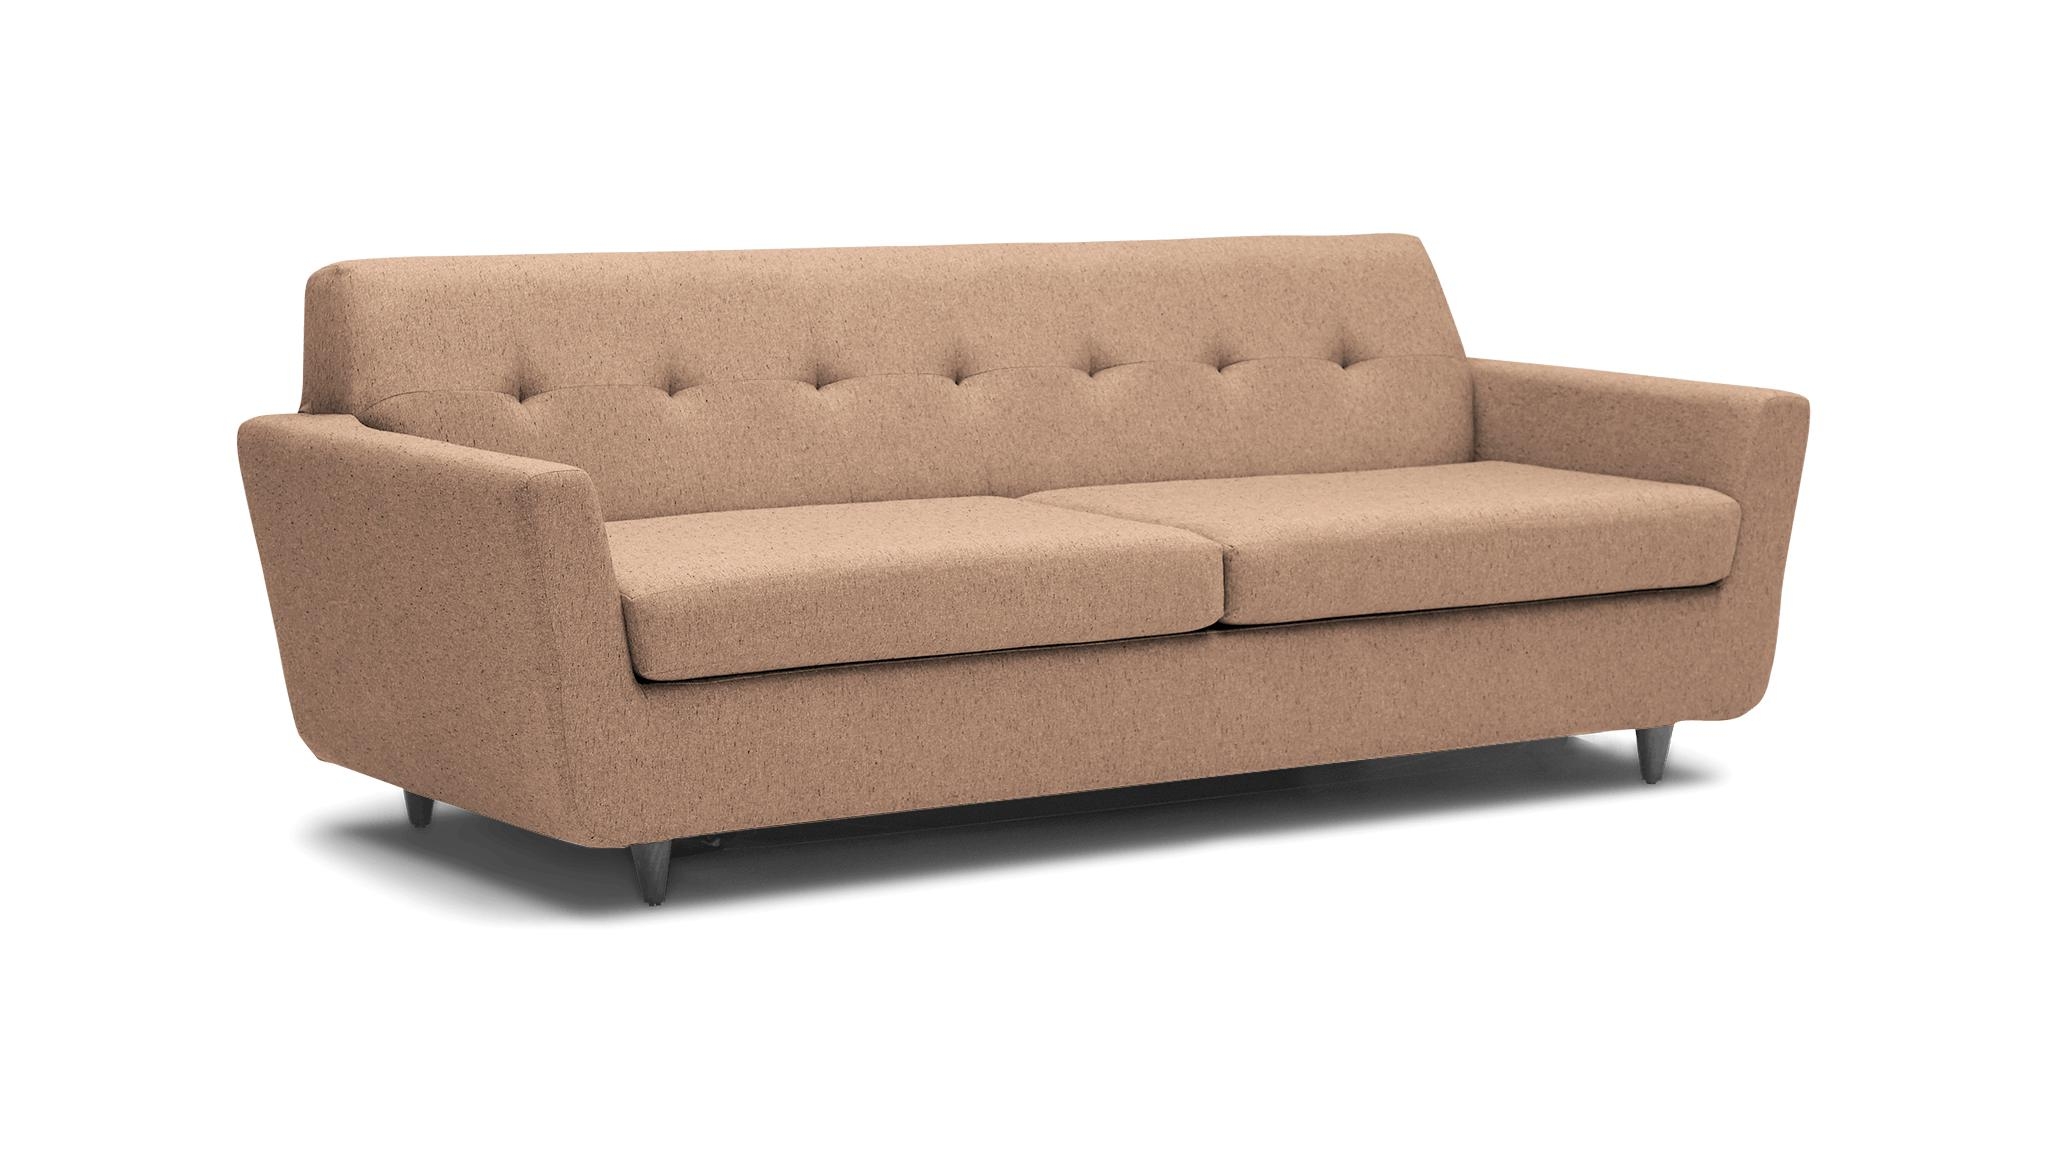 Pink Hughes Mid Century Modern Sleeper Sofa - Royale Blush - Mocha - Image 1